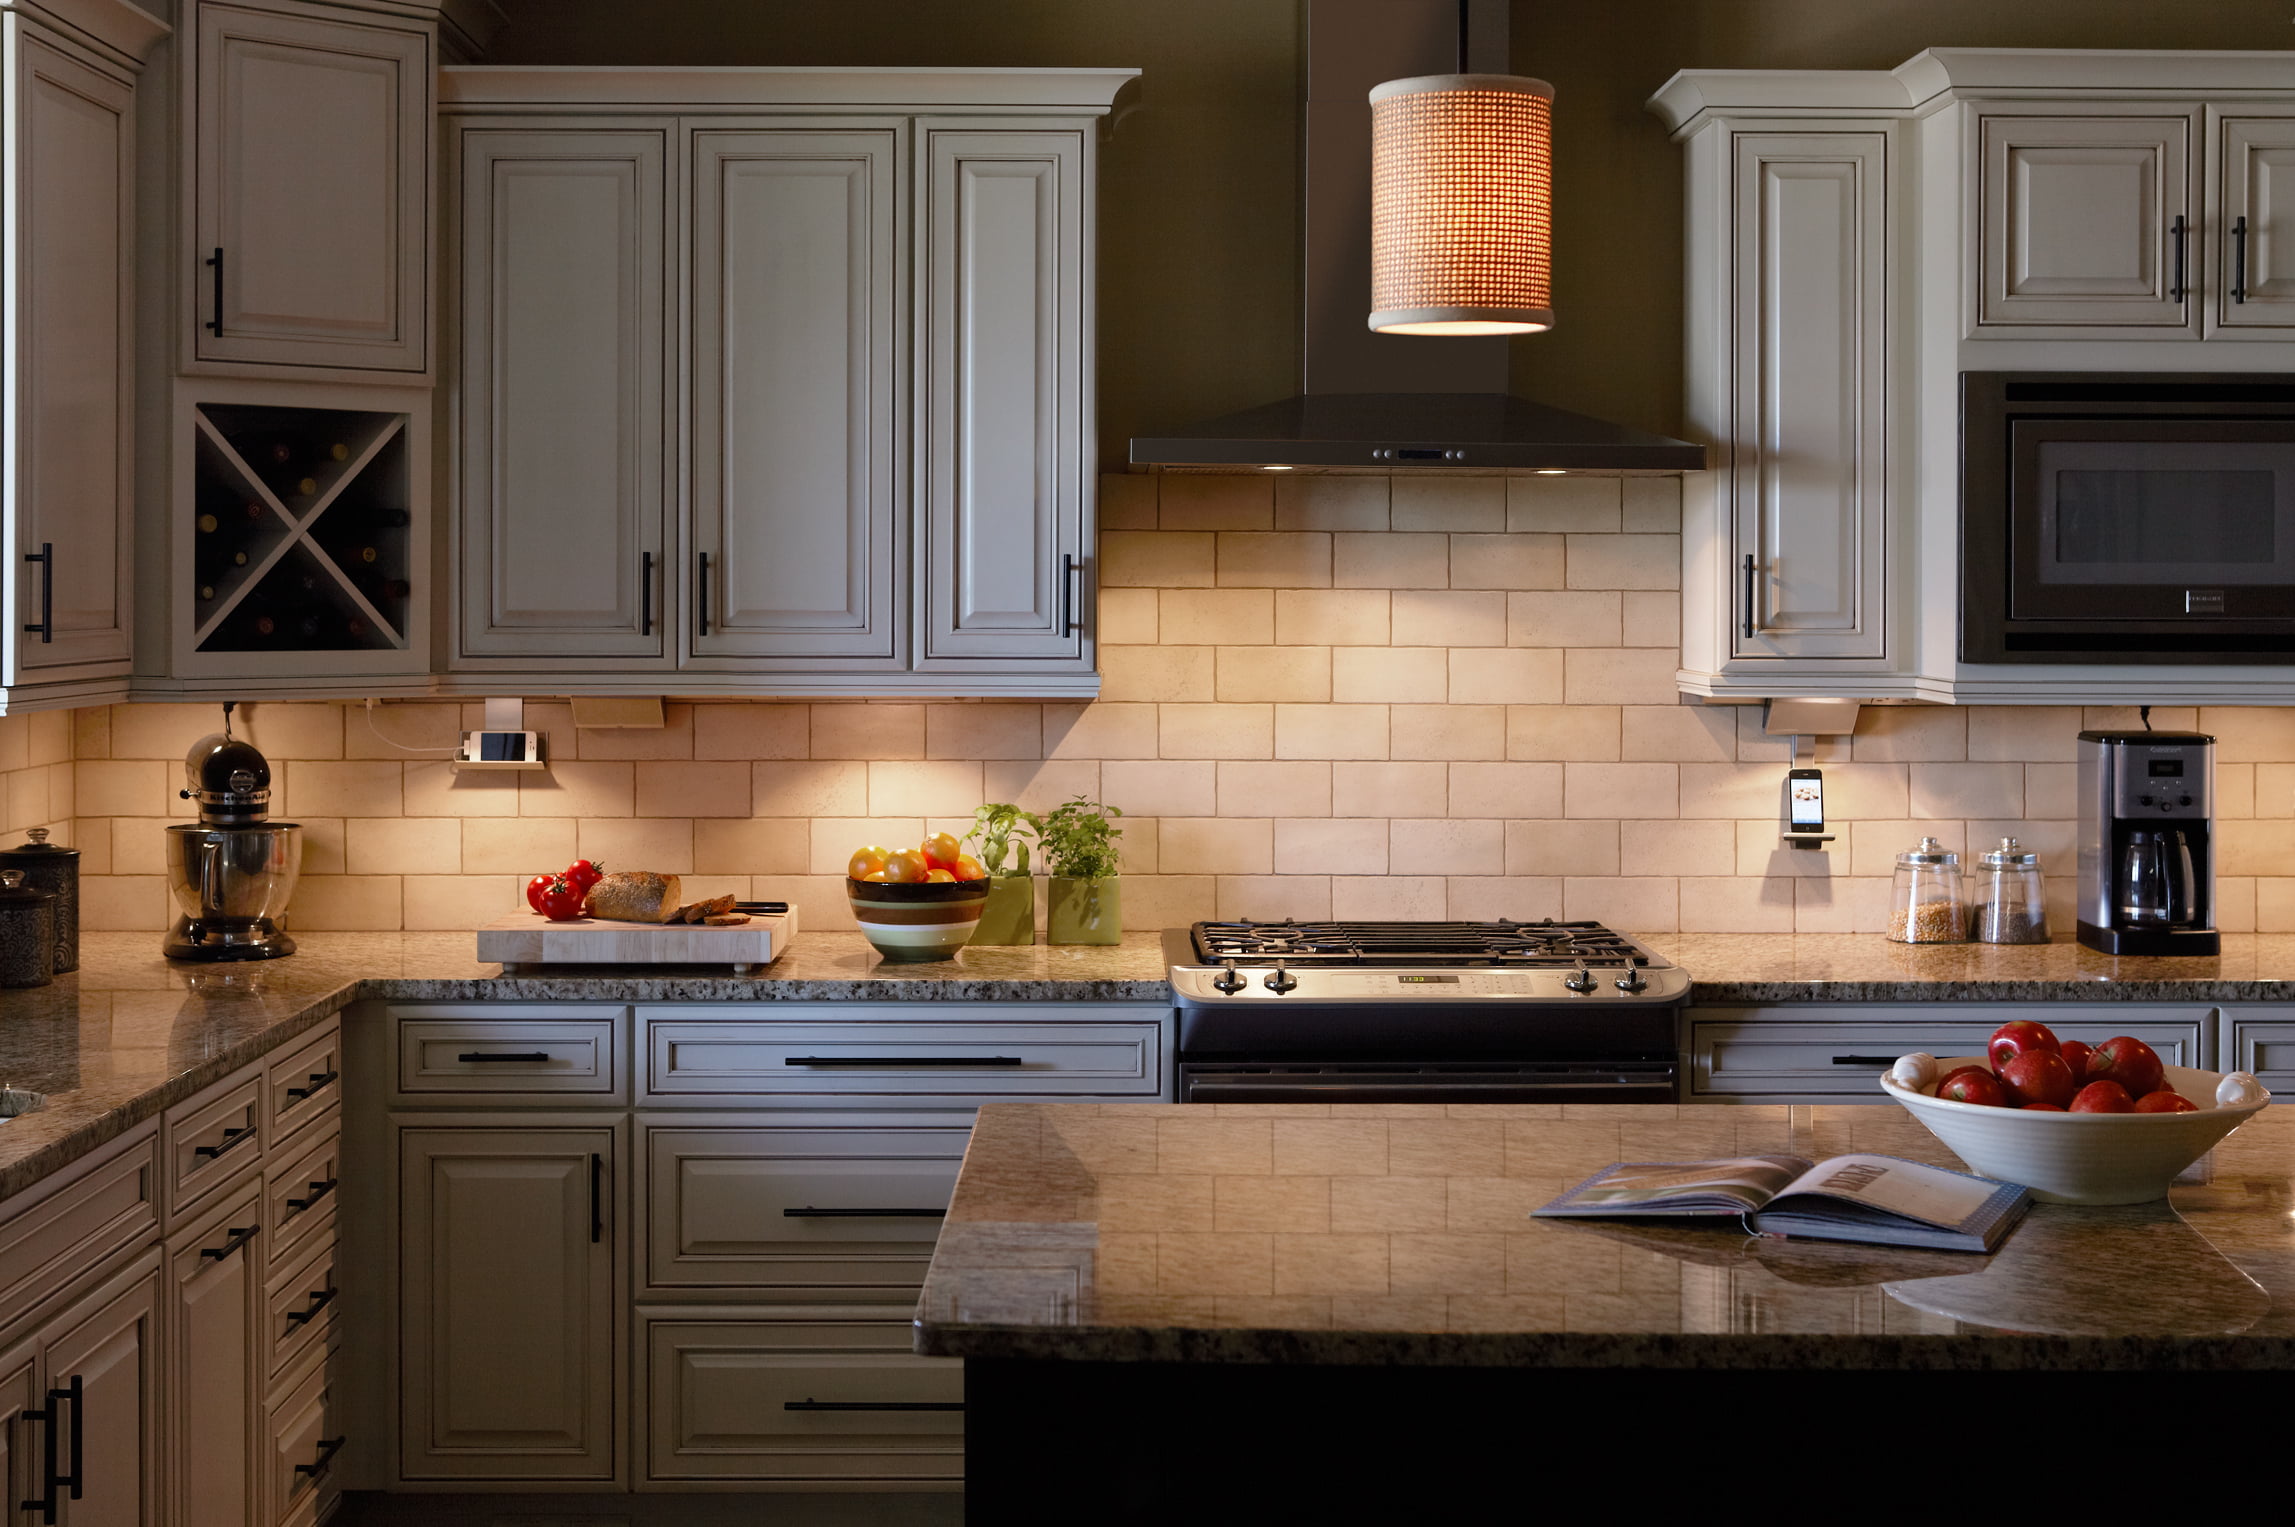 Torchstar Matte Led Under Cabinet Lighting For Kitchen 3000k Warm